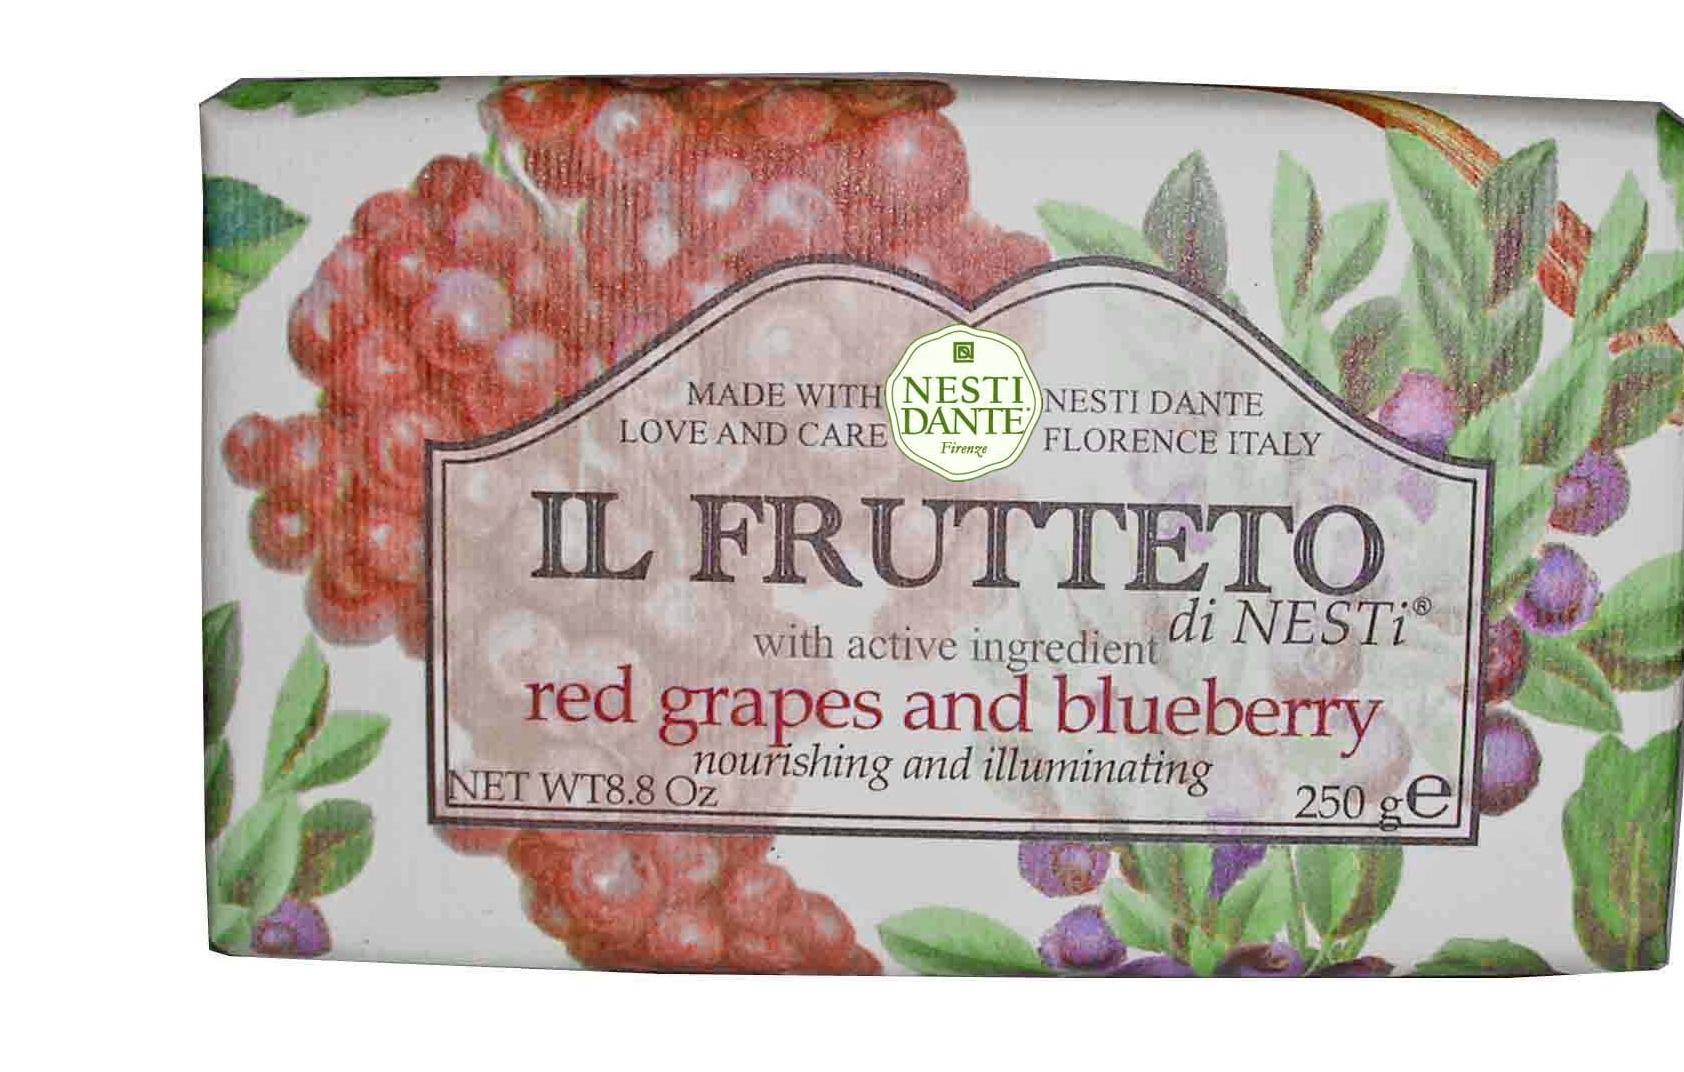 Nesti Dante Il Frutteto mydo na bazie winogron i jagd 250g